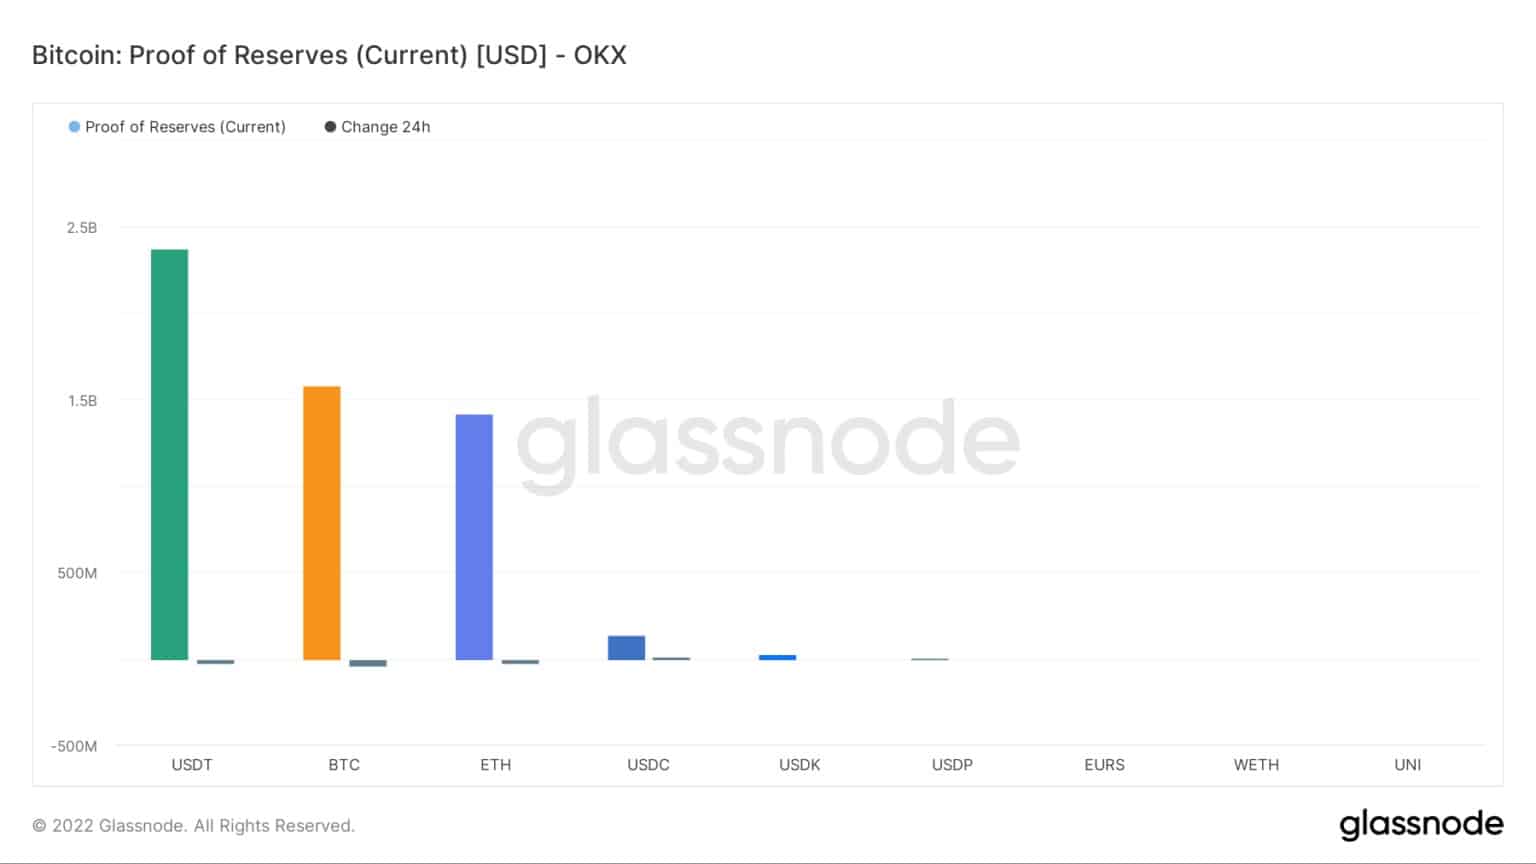 Prova delle riserve - OKX / Fonte: Glassnode